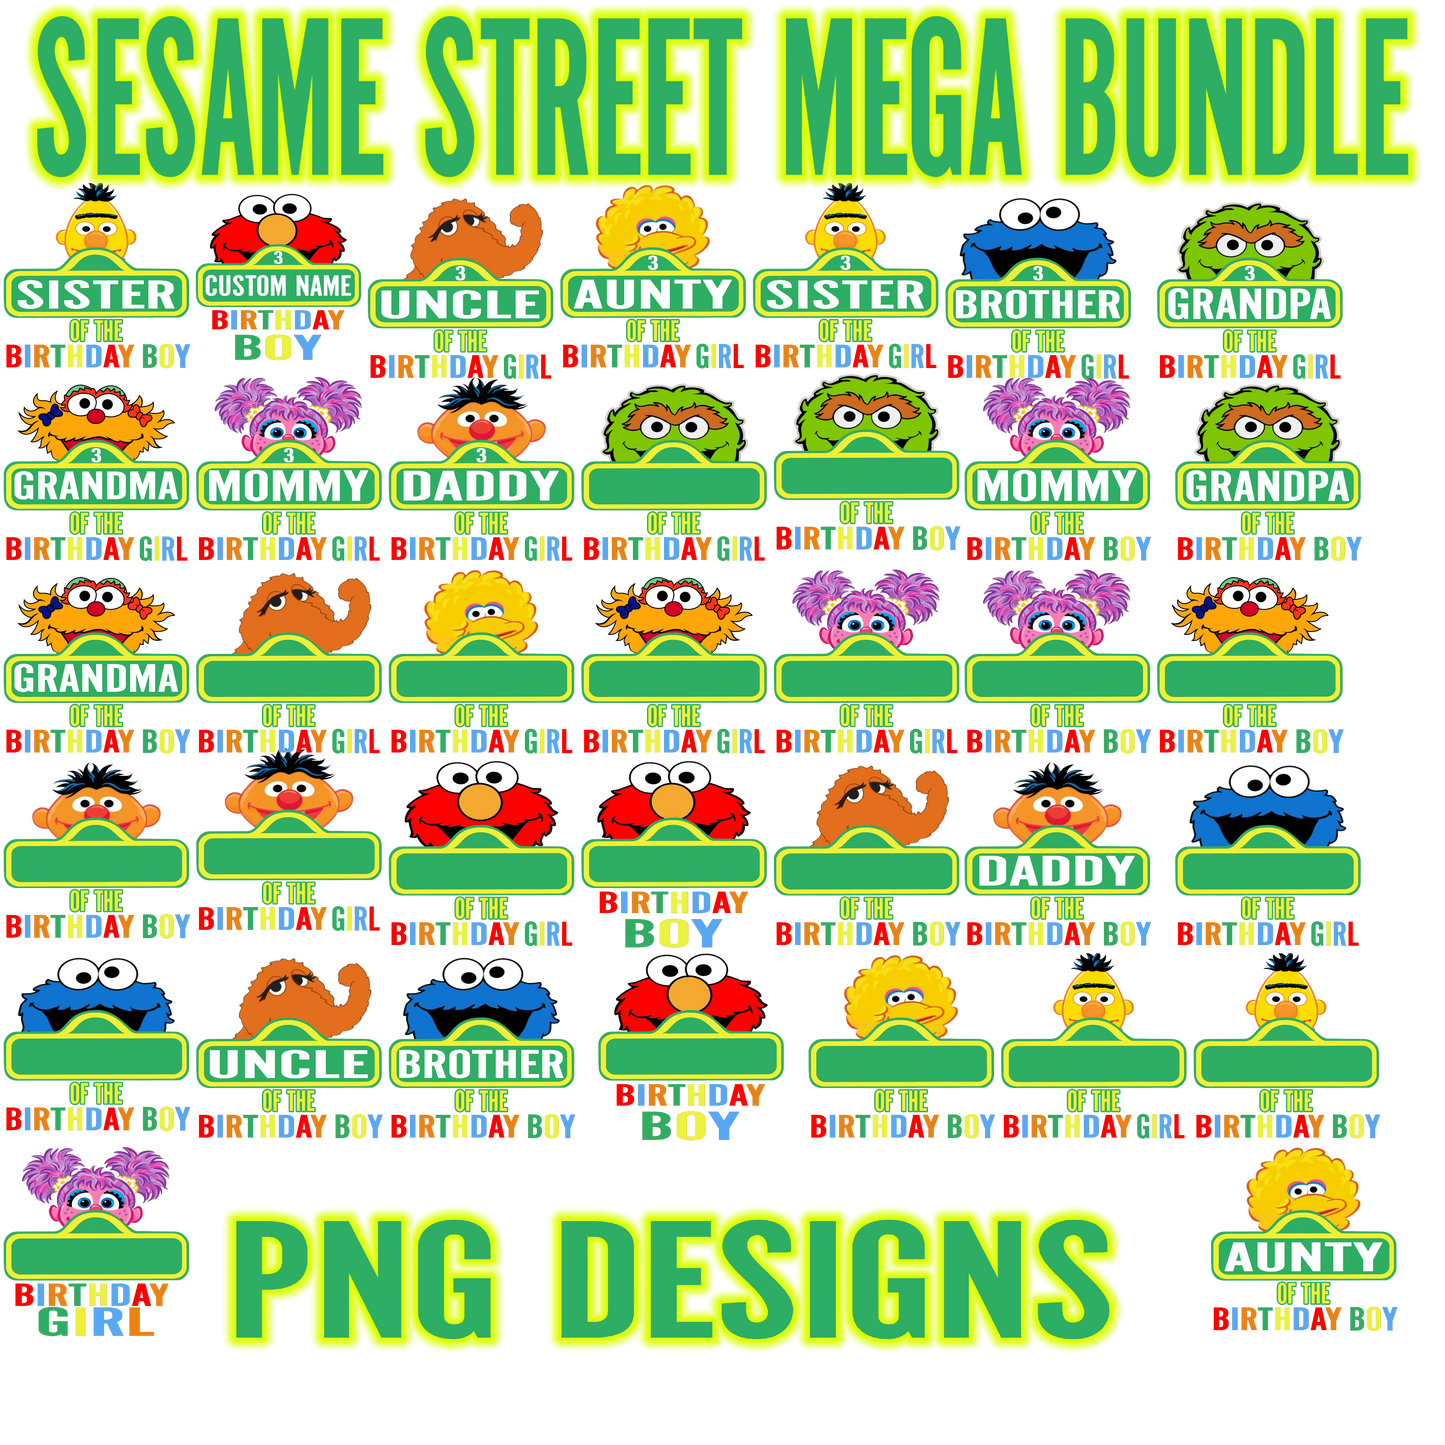 Sesame Street Mega Bundle PNG Files for Birthday's!